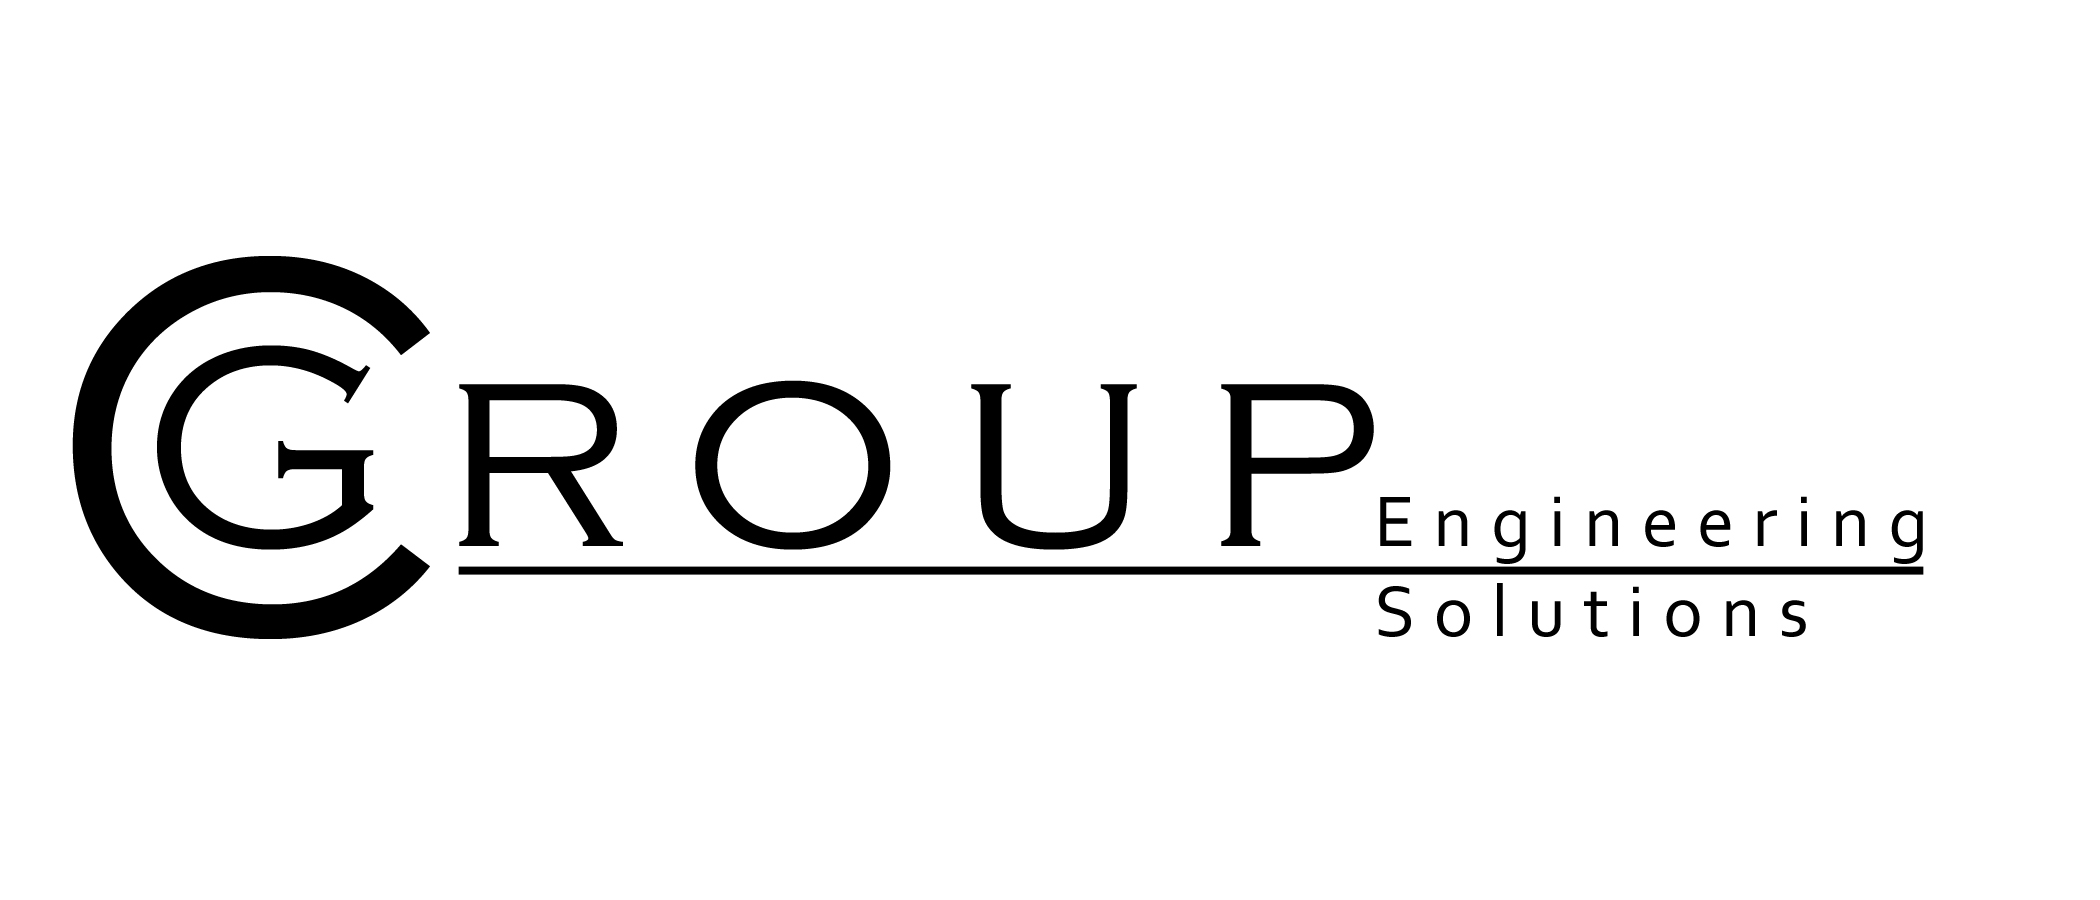 C-Group